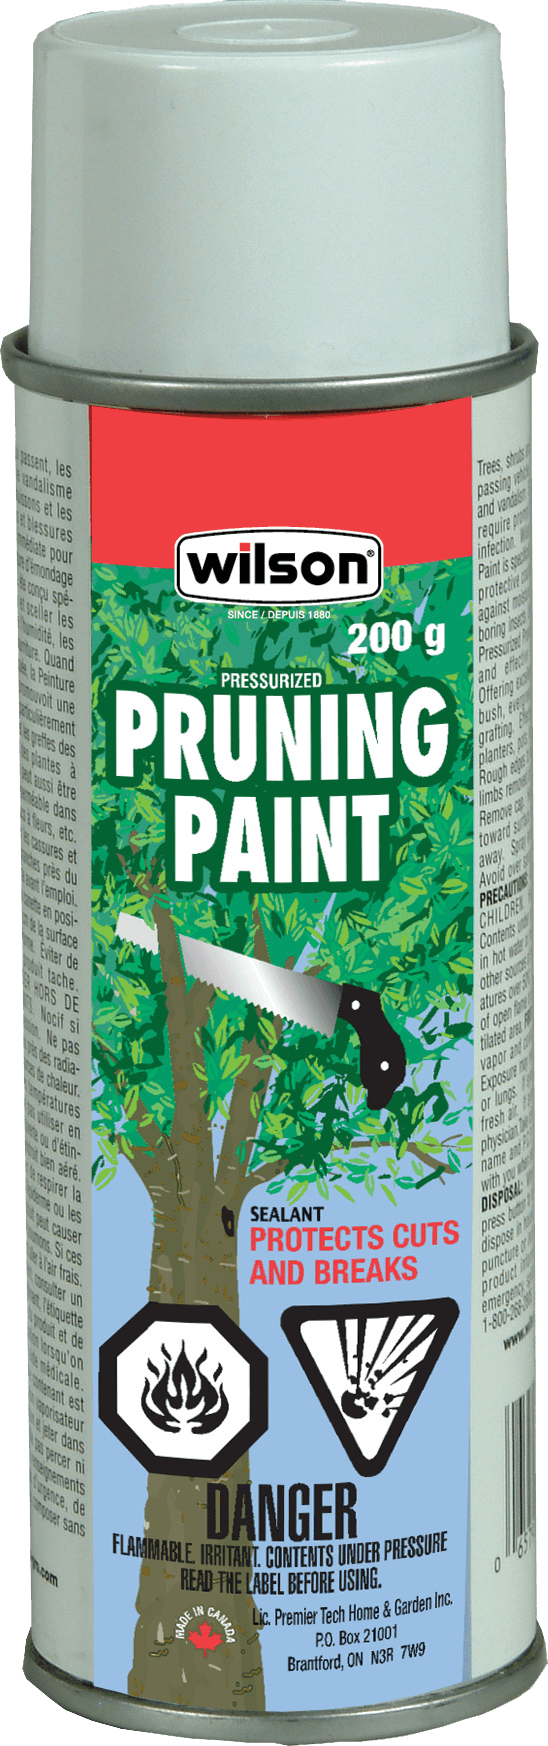 Wilson Pruning Paint 200gm